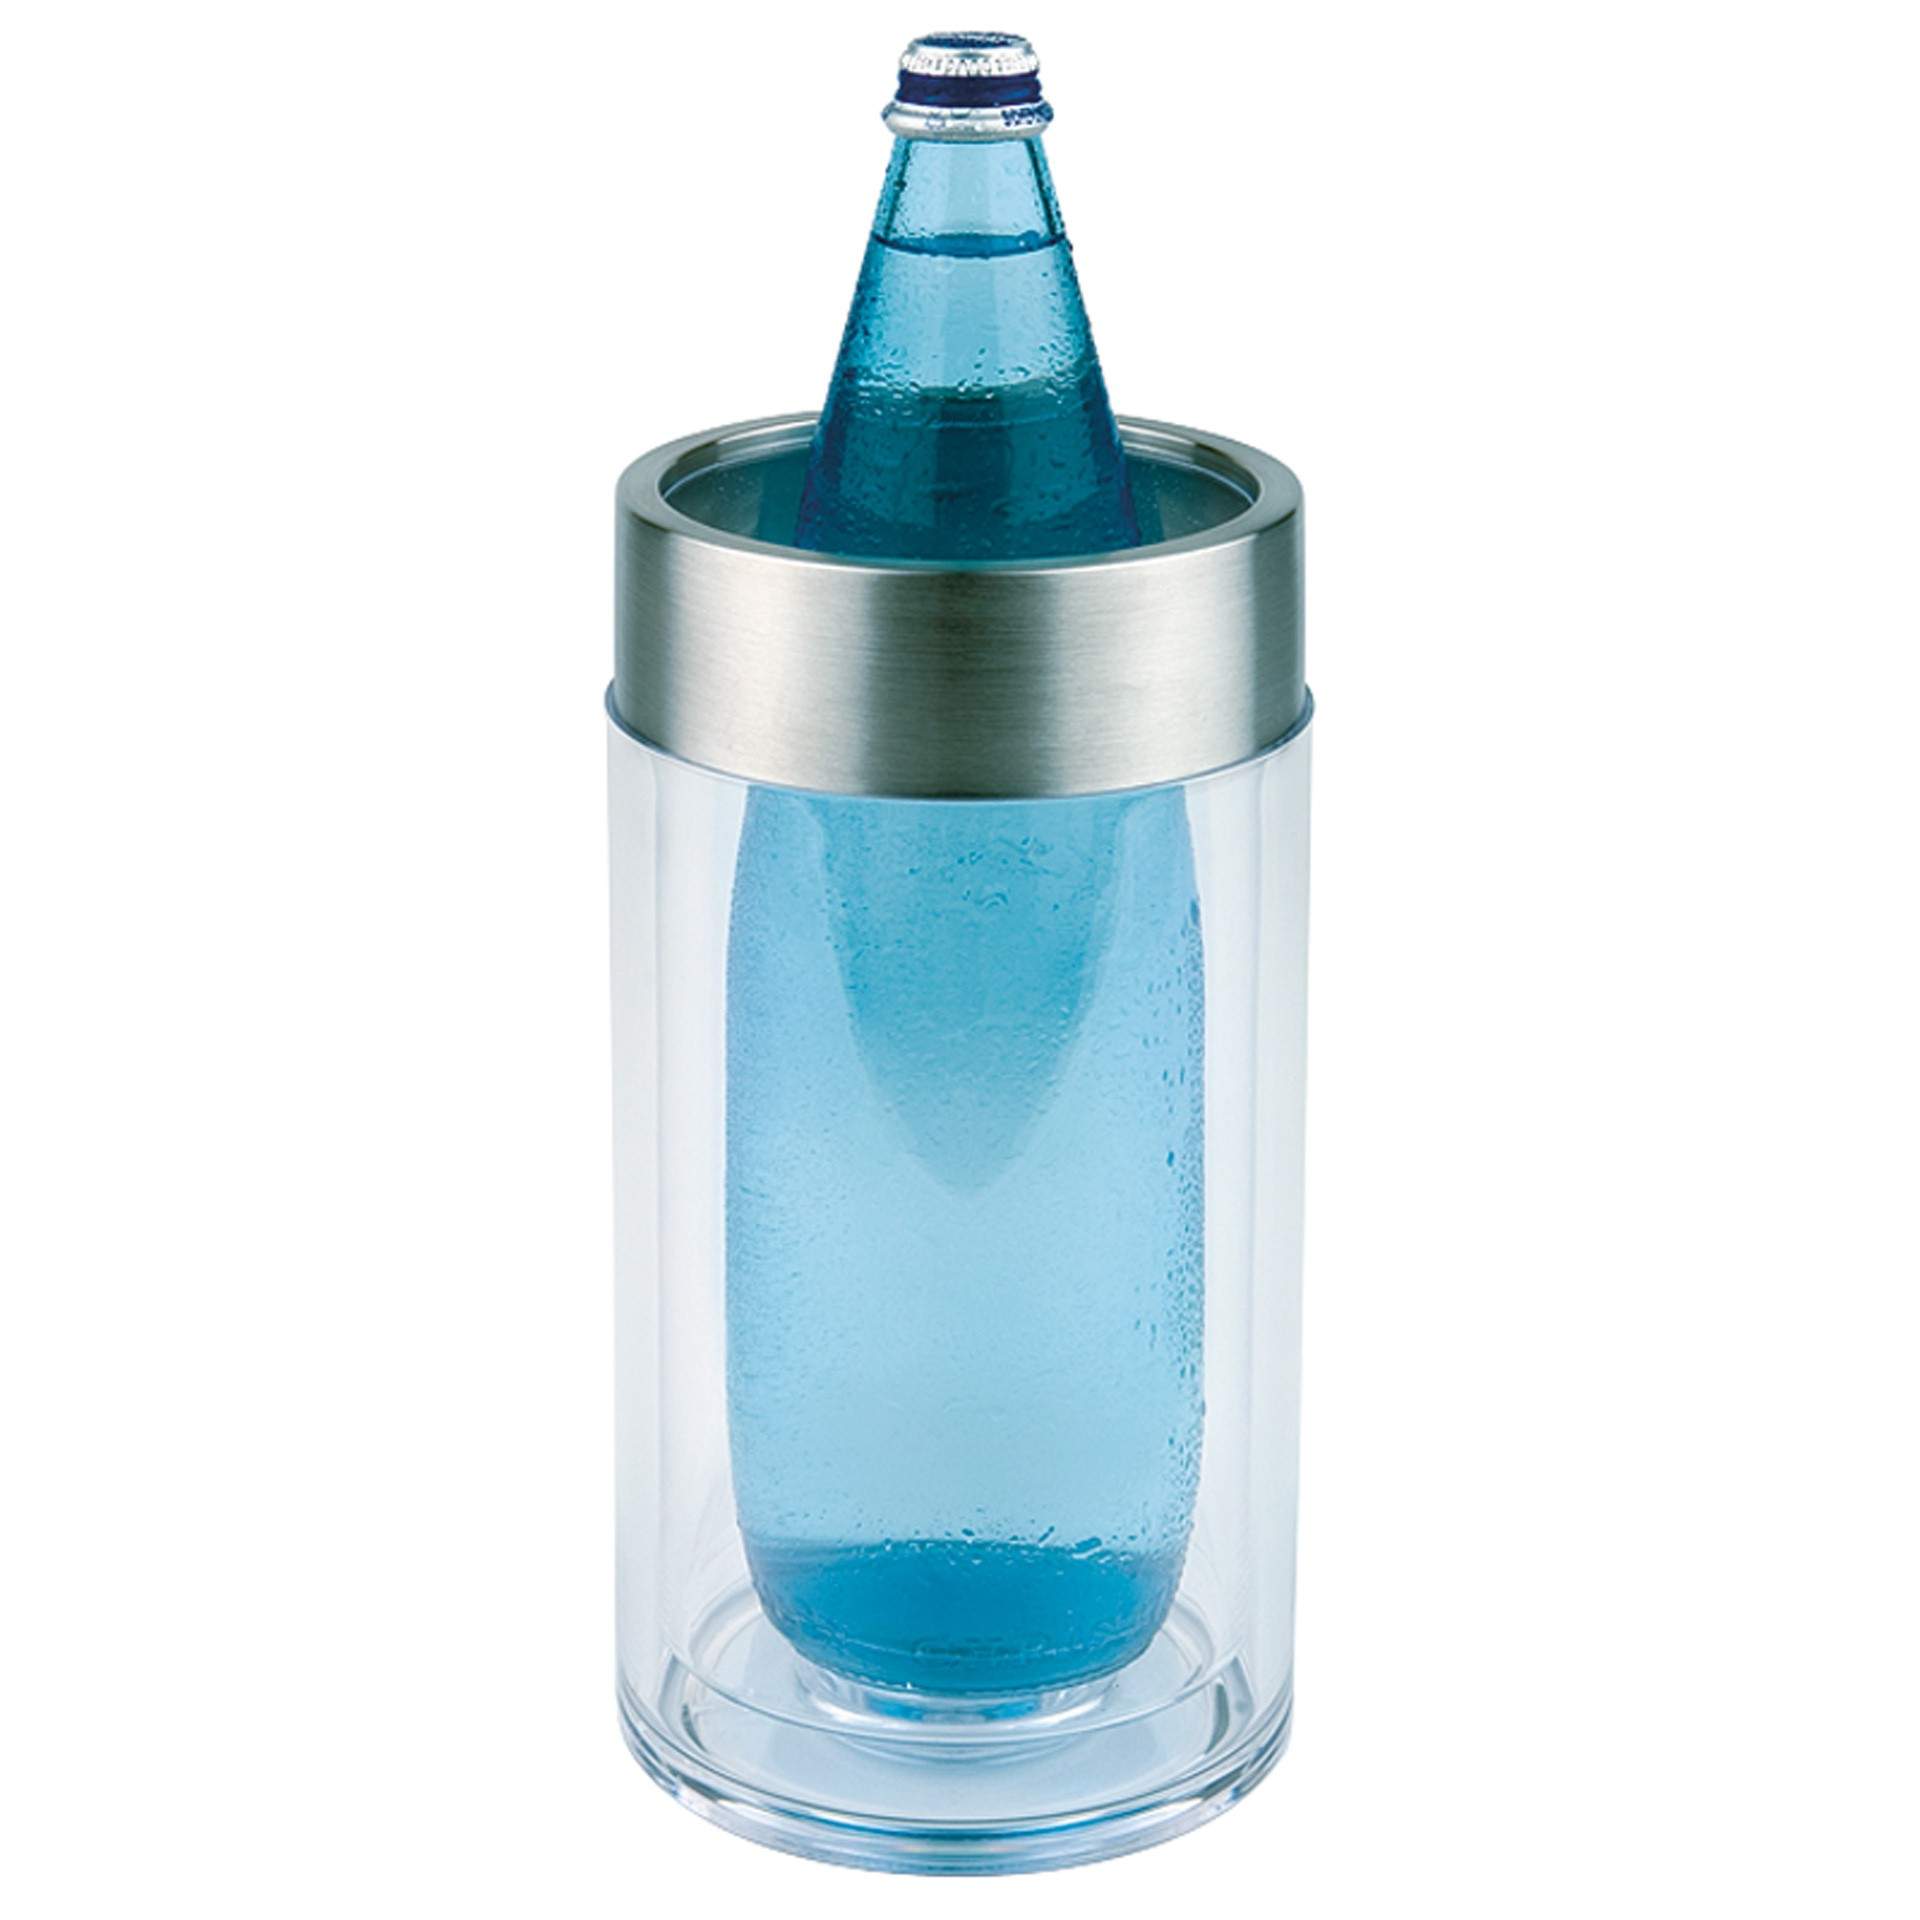 Flaschenkühler - doppelwandig - transparent - Abm. 23,0 cm - Ø 11,5 cm - MS - 36050-B